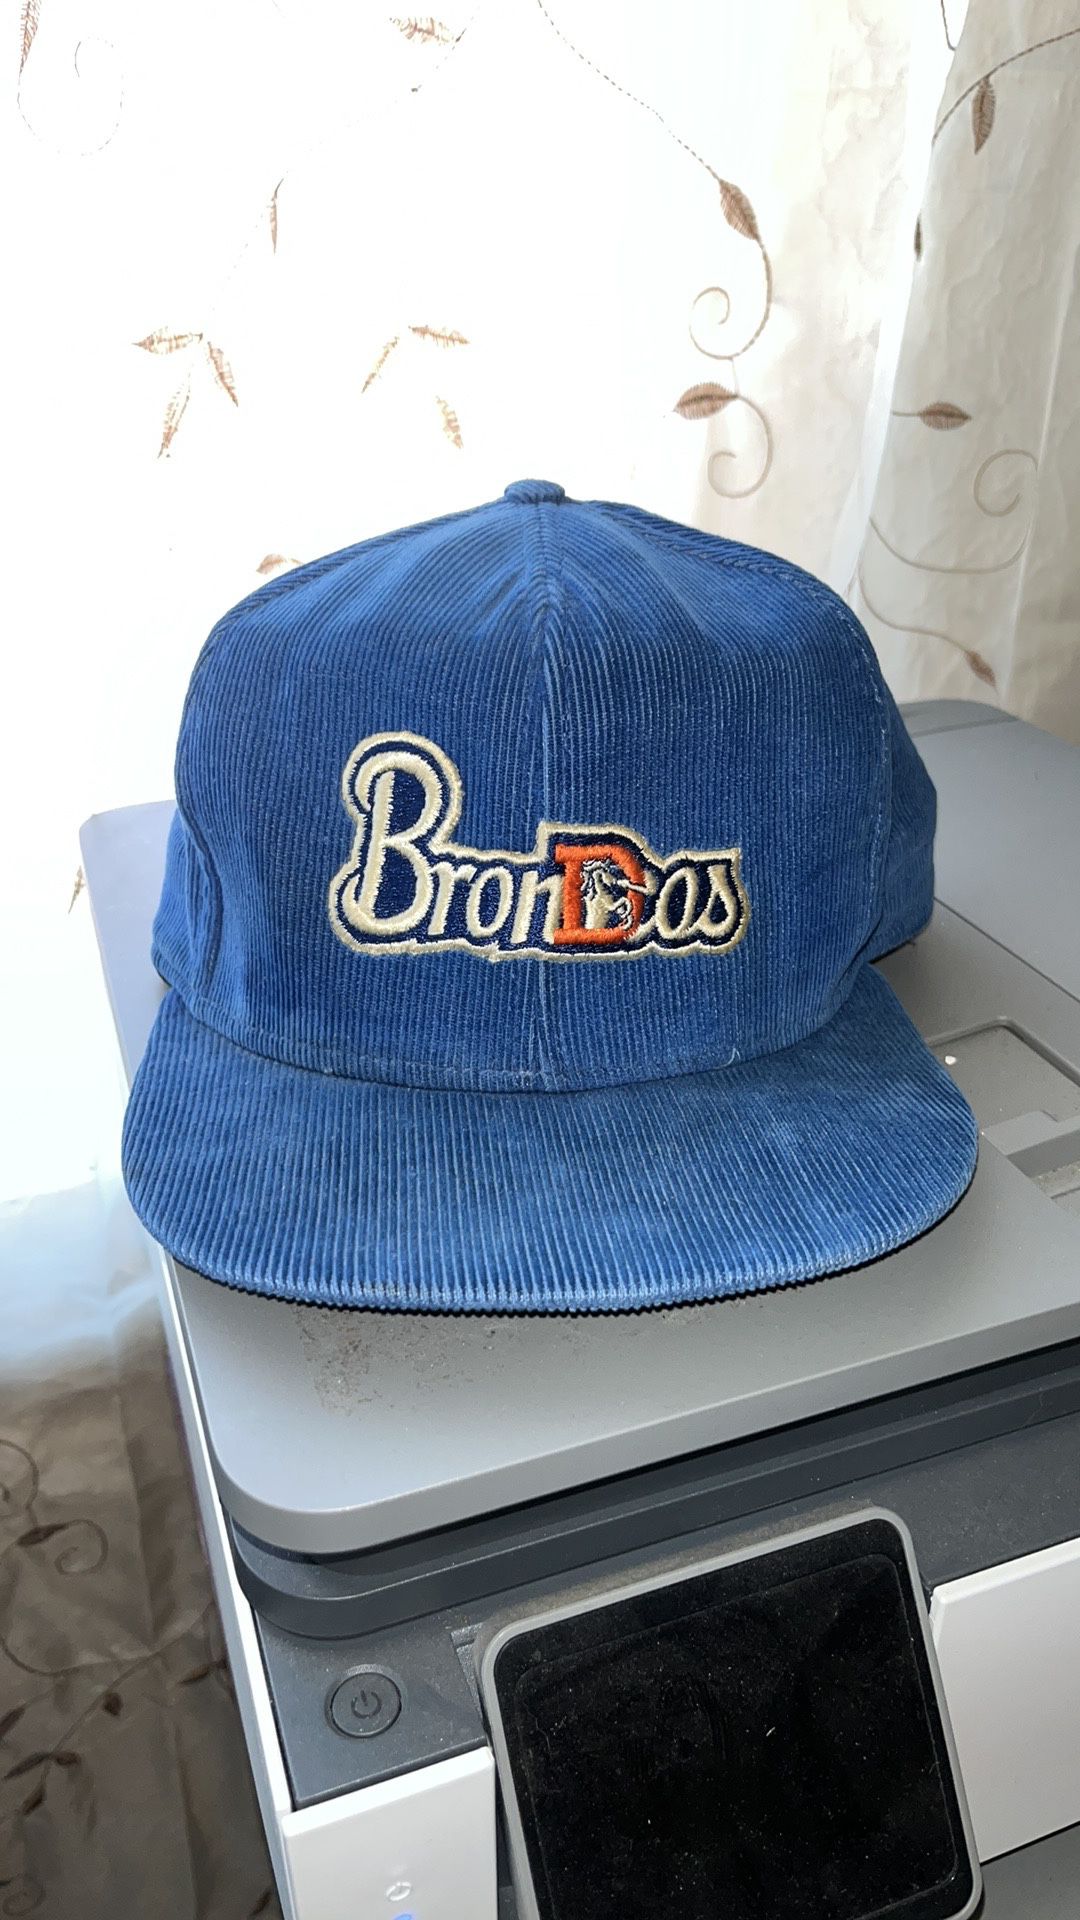 Vintage NFL, Denver Broncos corduroy snapback hat, good condition 80s cap  AJD pro line nfl football sports hat with straps in good condition blue  denv for Sale in Unm, NM - OfferUp